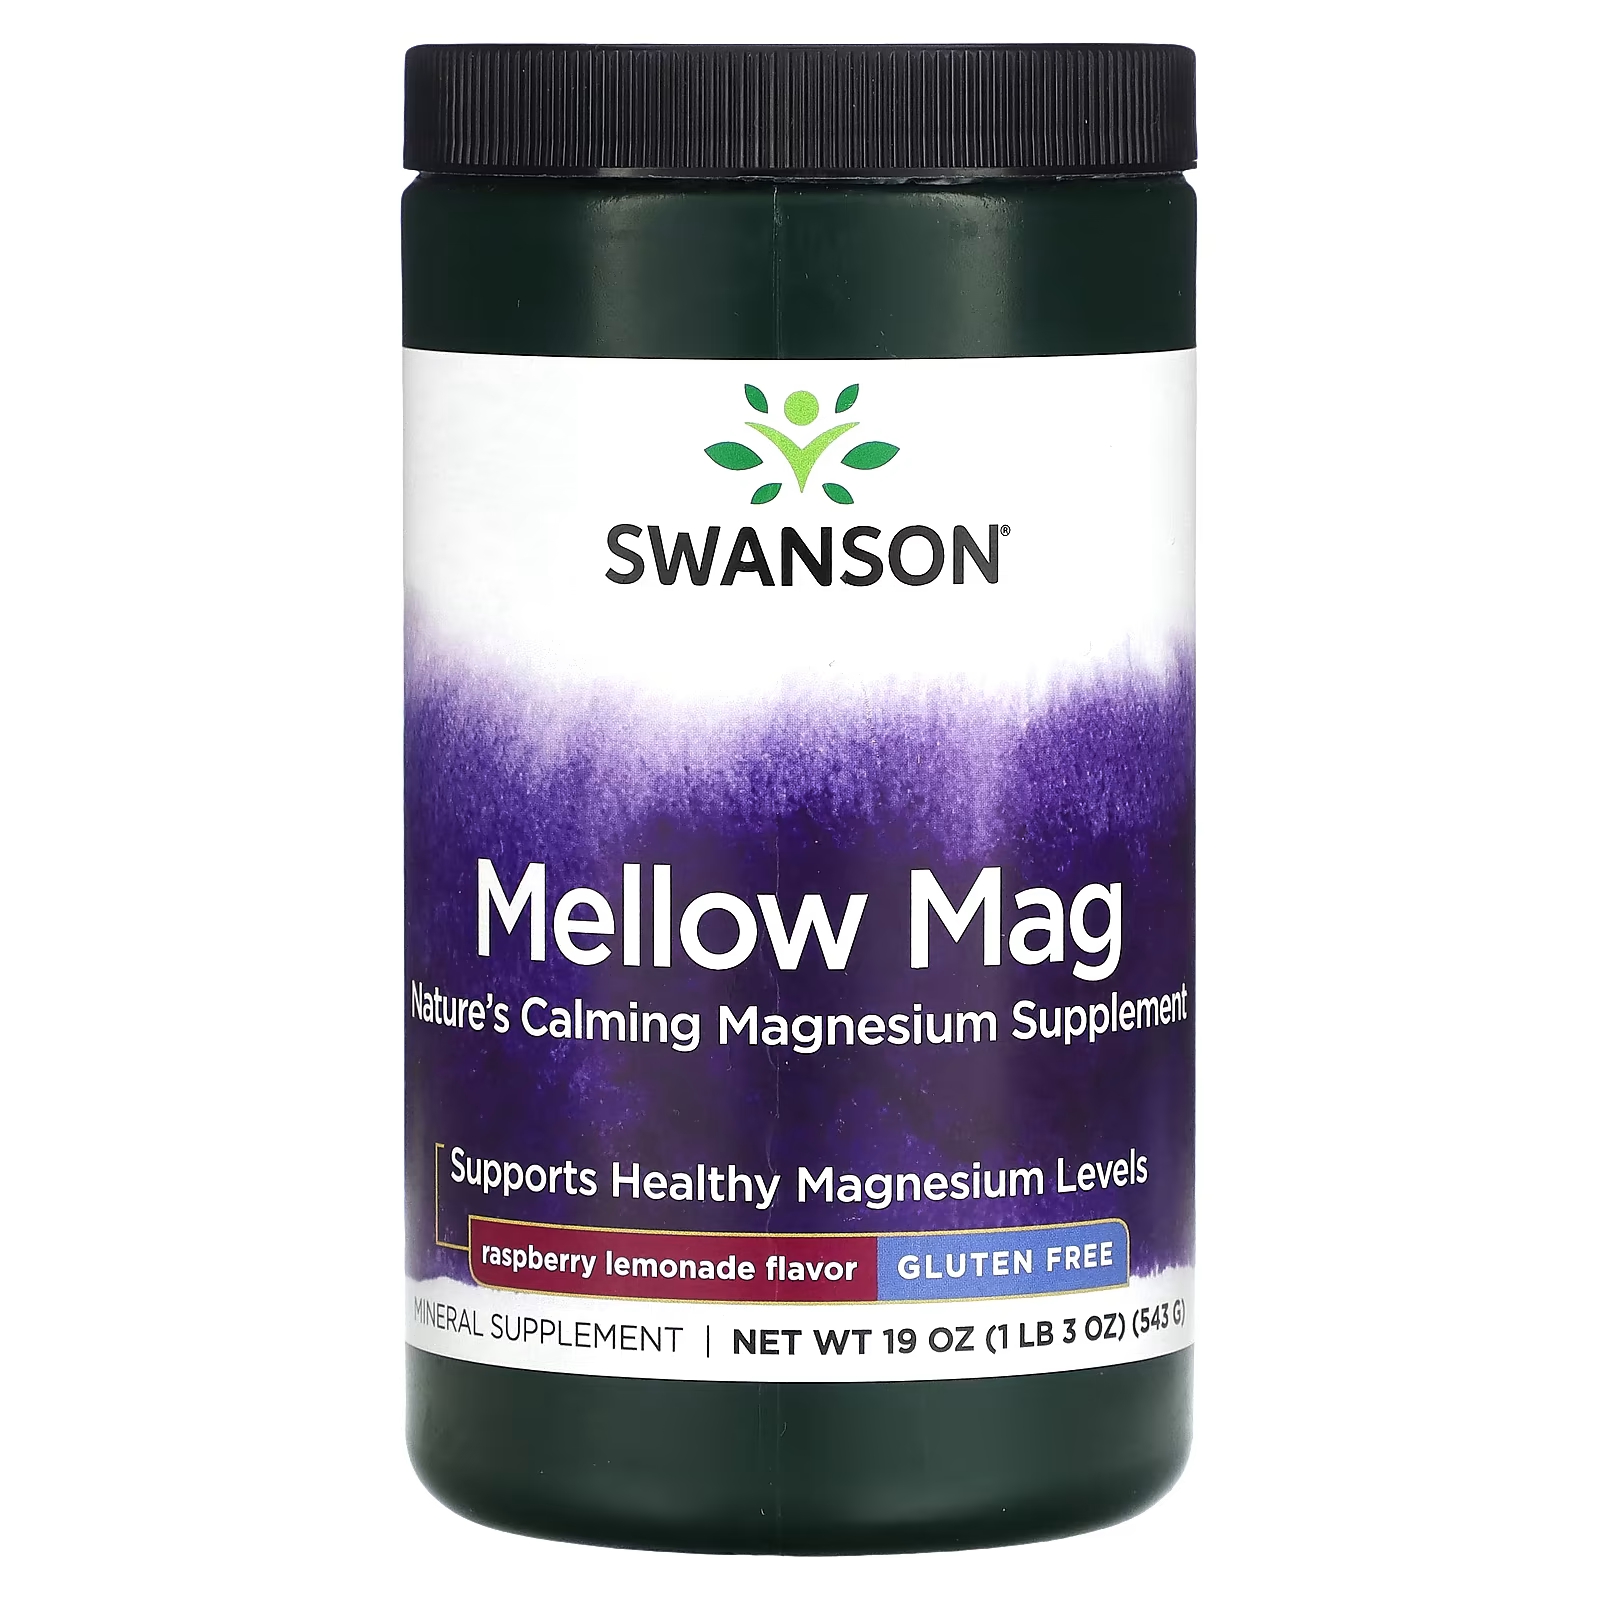 Пищевая добавка Swanson Mellow Mag со вкусом малинового лимонада, 554 г карамель бон пари со вкусом фруктового лимонада 65 г